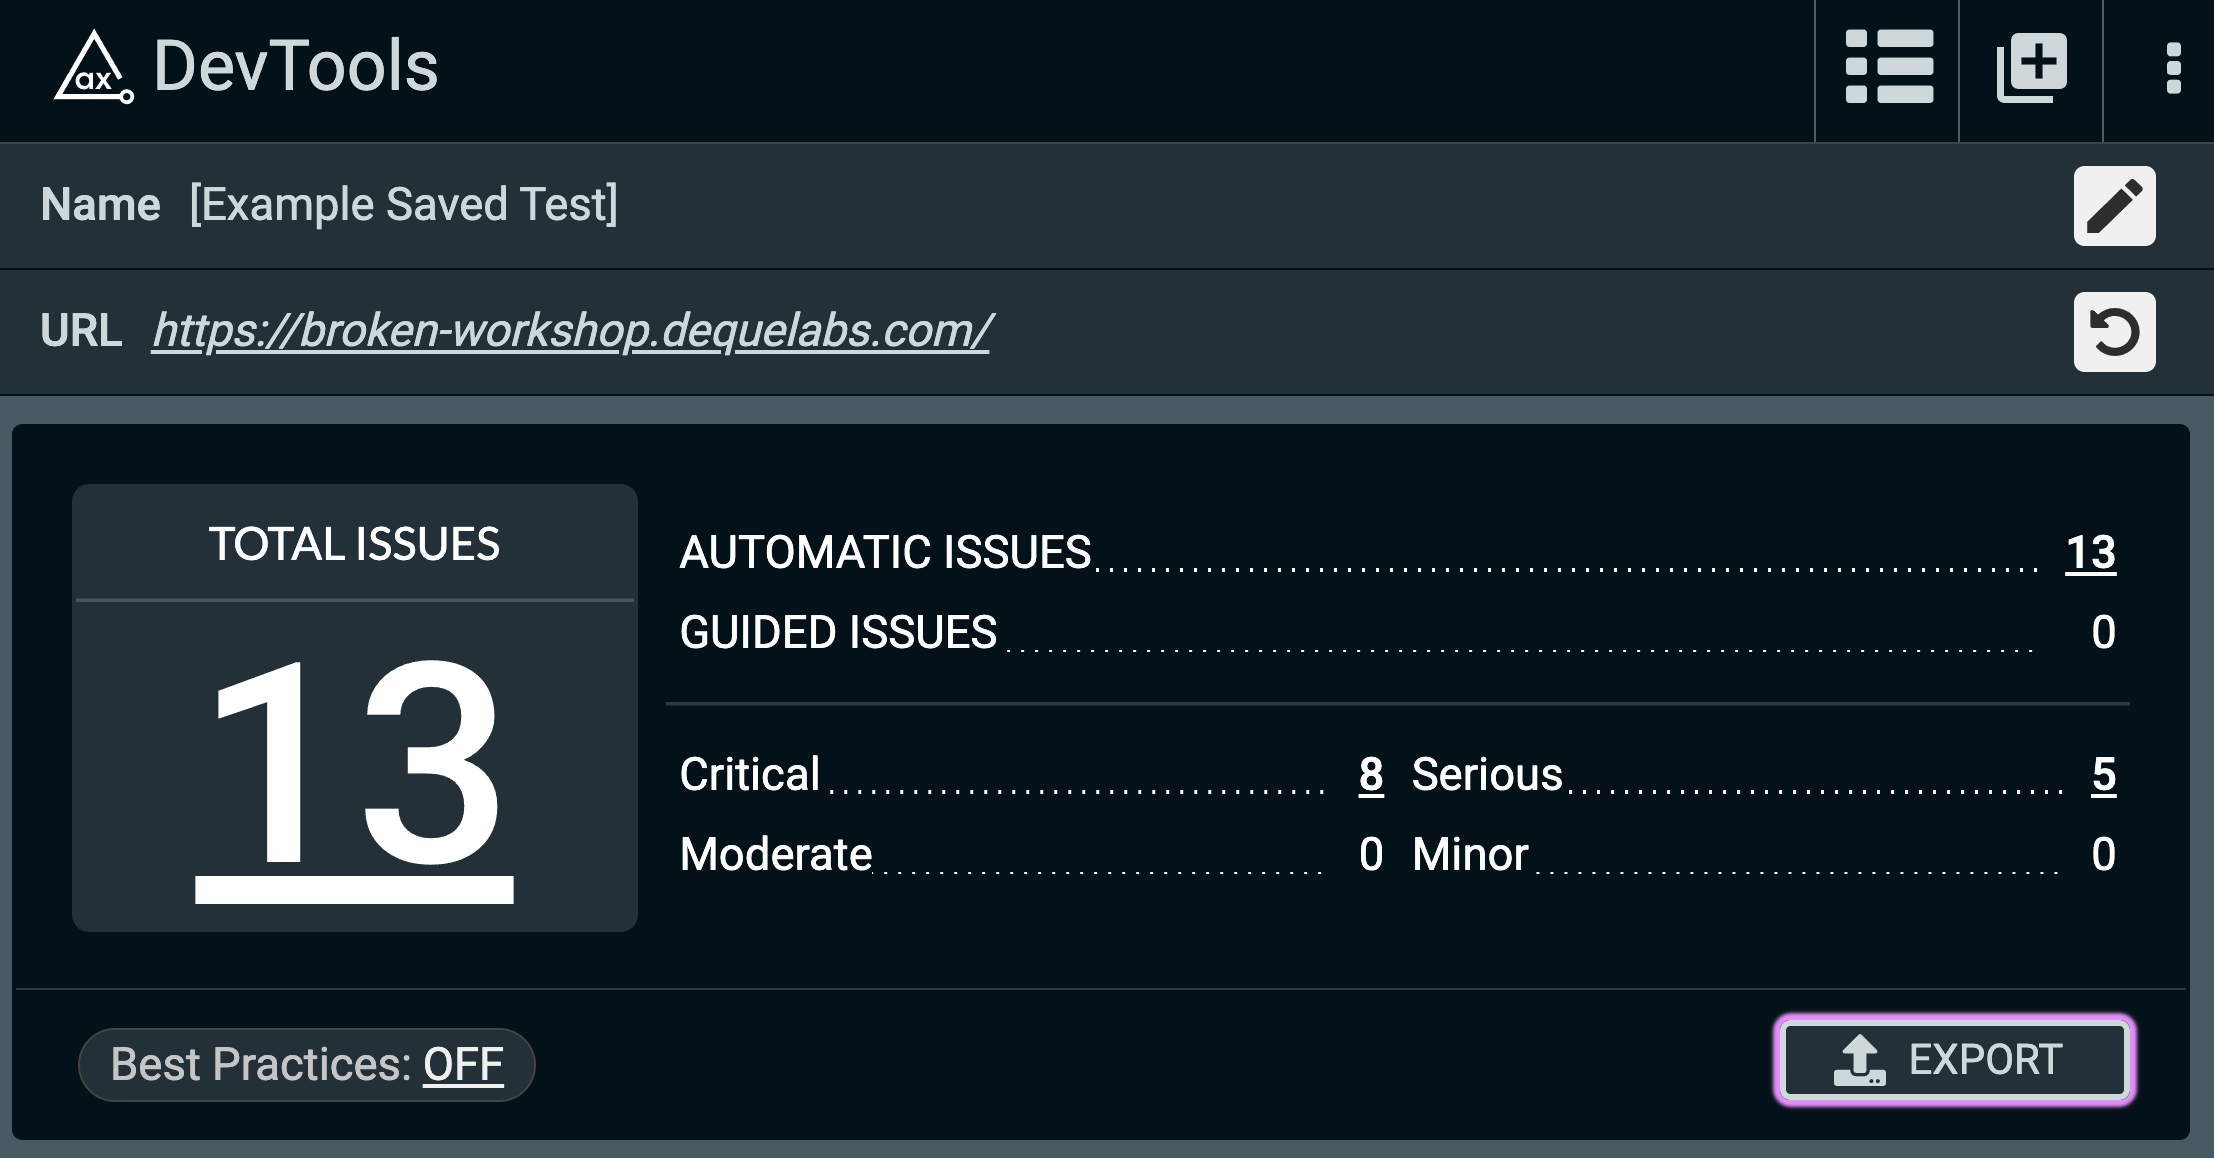 Screenshot he axe DevTools browser extension highlighting the "EXPORT" button.